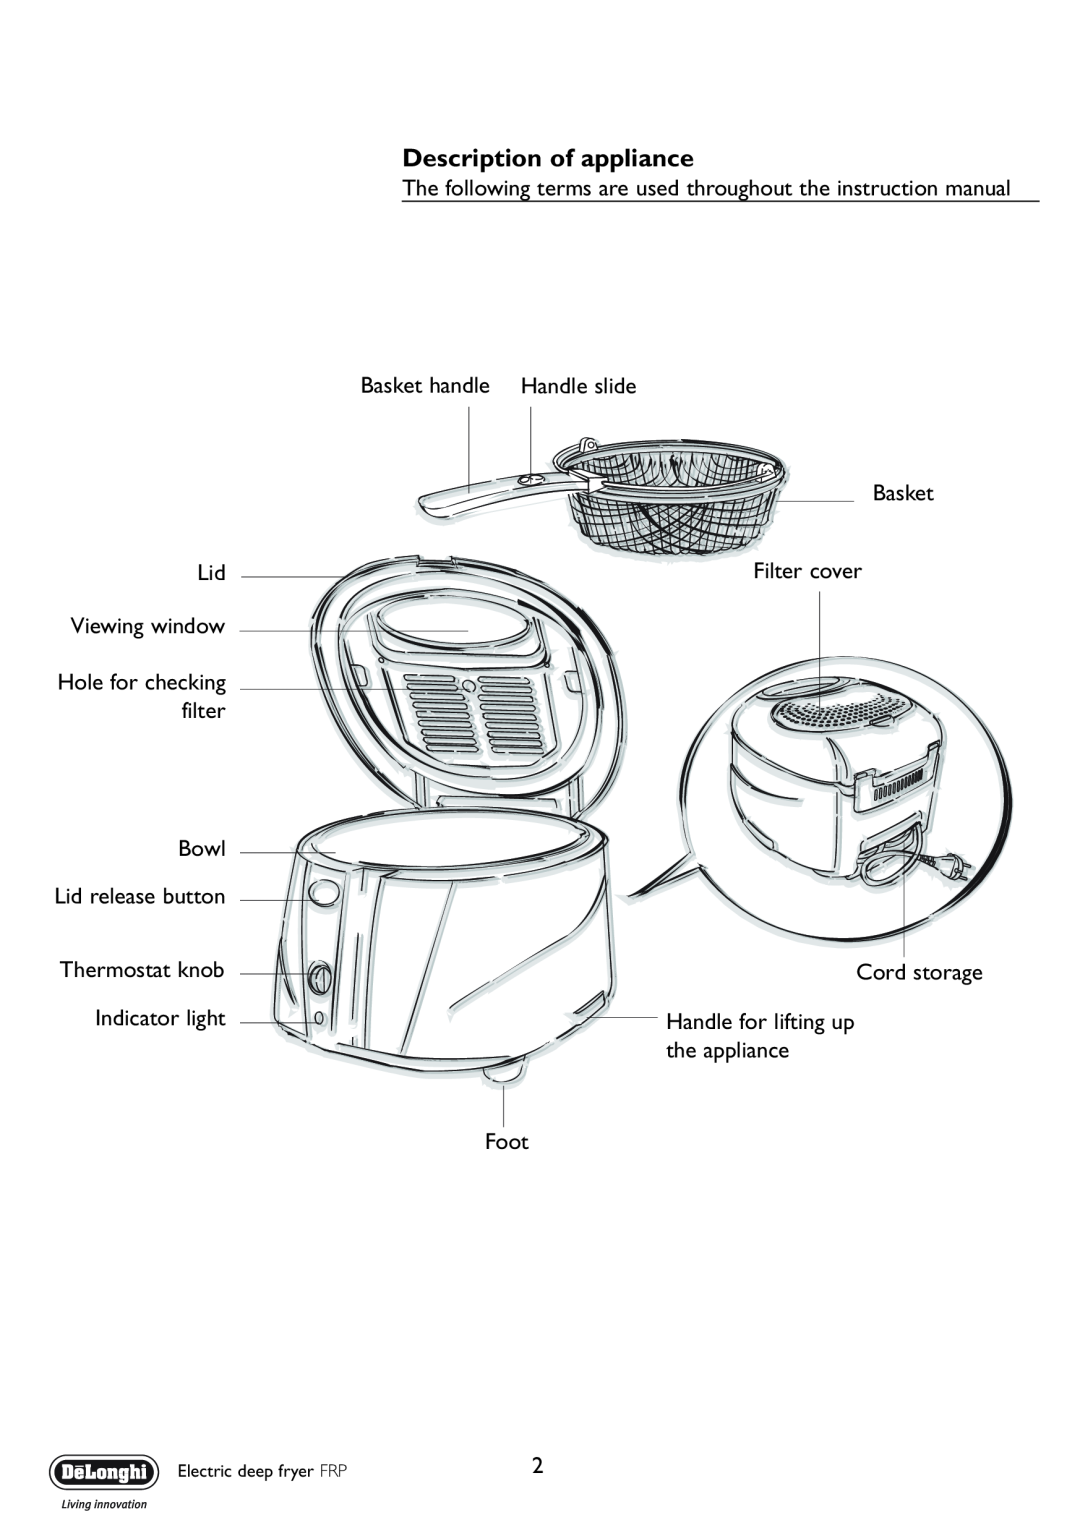 DeLonghi FRP manual Description of appliance, Basket handle Handle slide Basket Filter cover, Foot, Lid Viewing window 